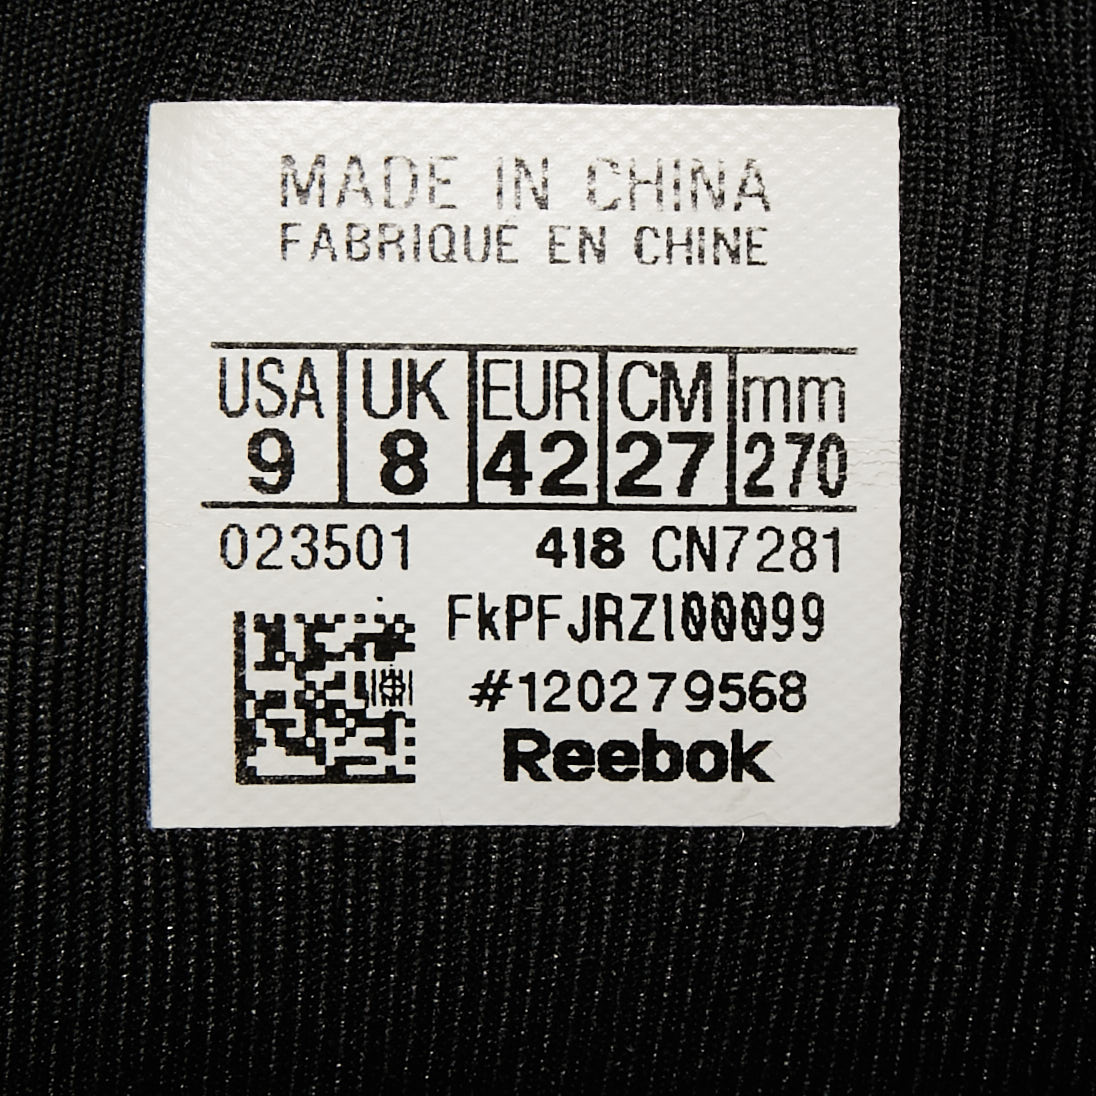 Vetements X Reebok Black/White Monogram Nylon And Fabric Instapump Fury Sneakers Size 42